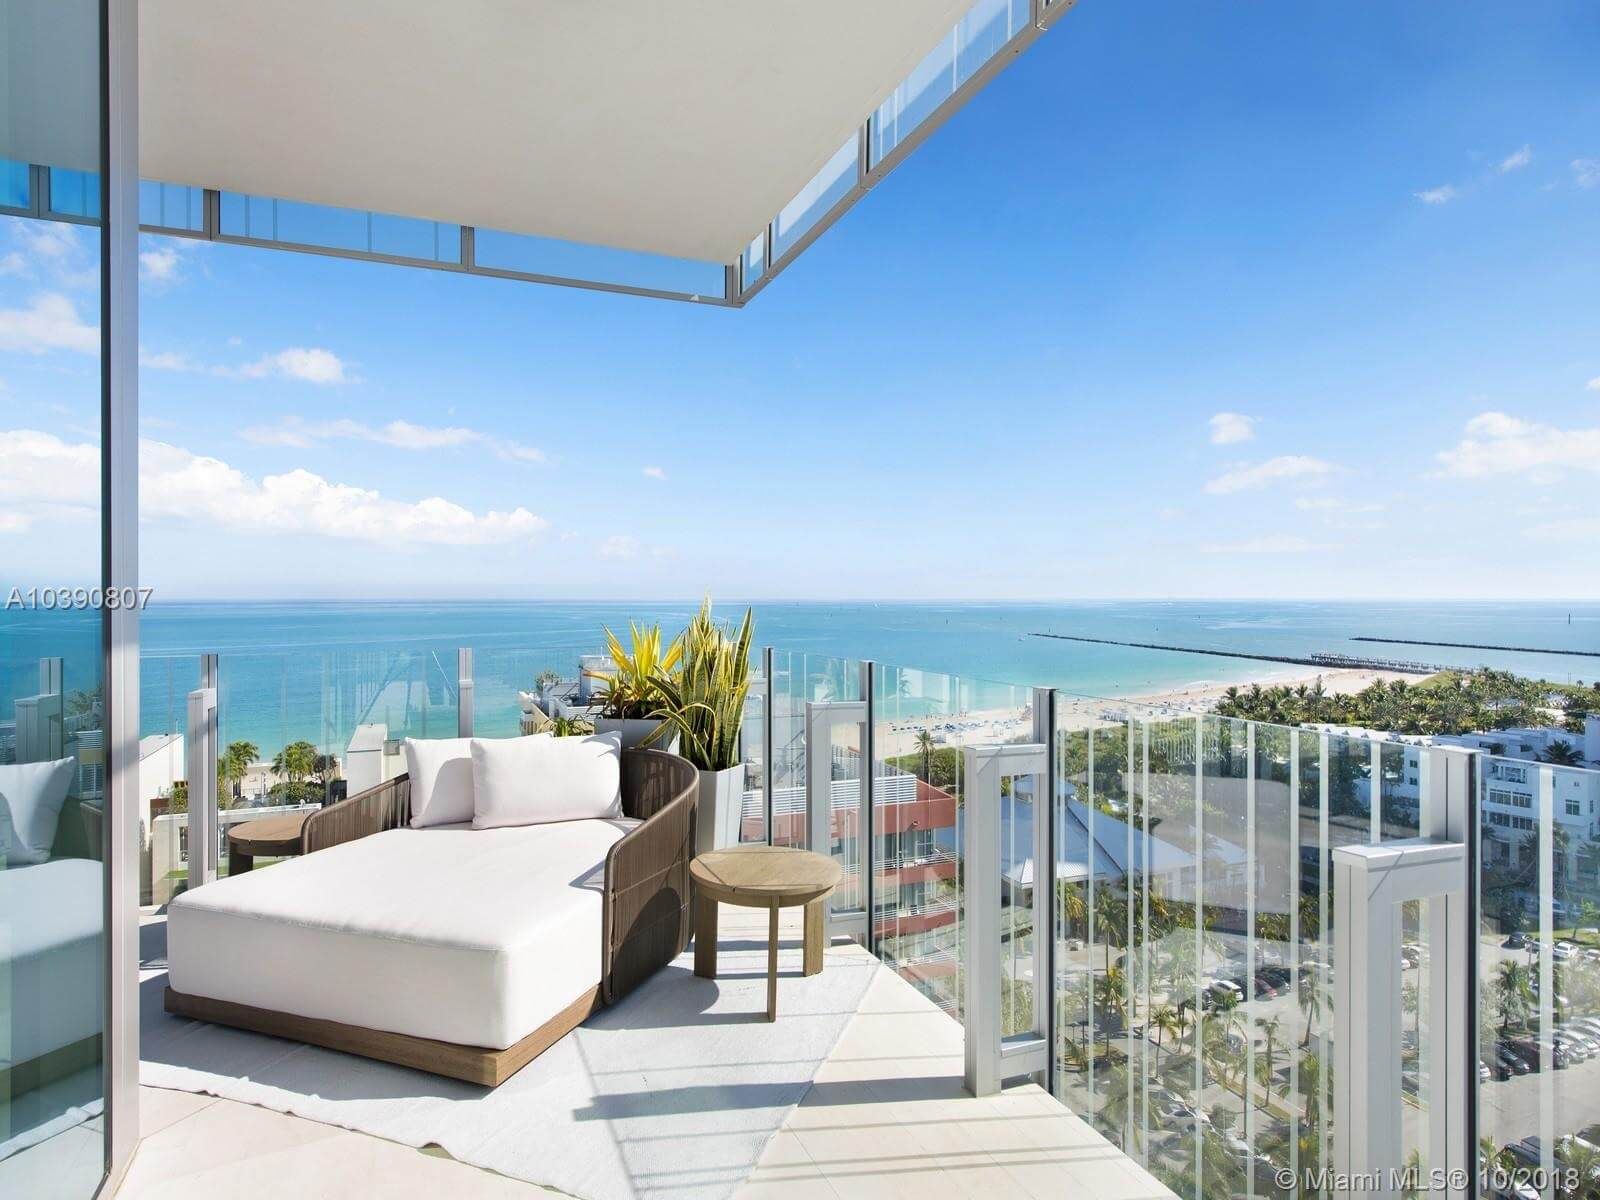 Glass Miami Beach - Vistas desde el balcón